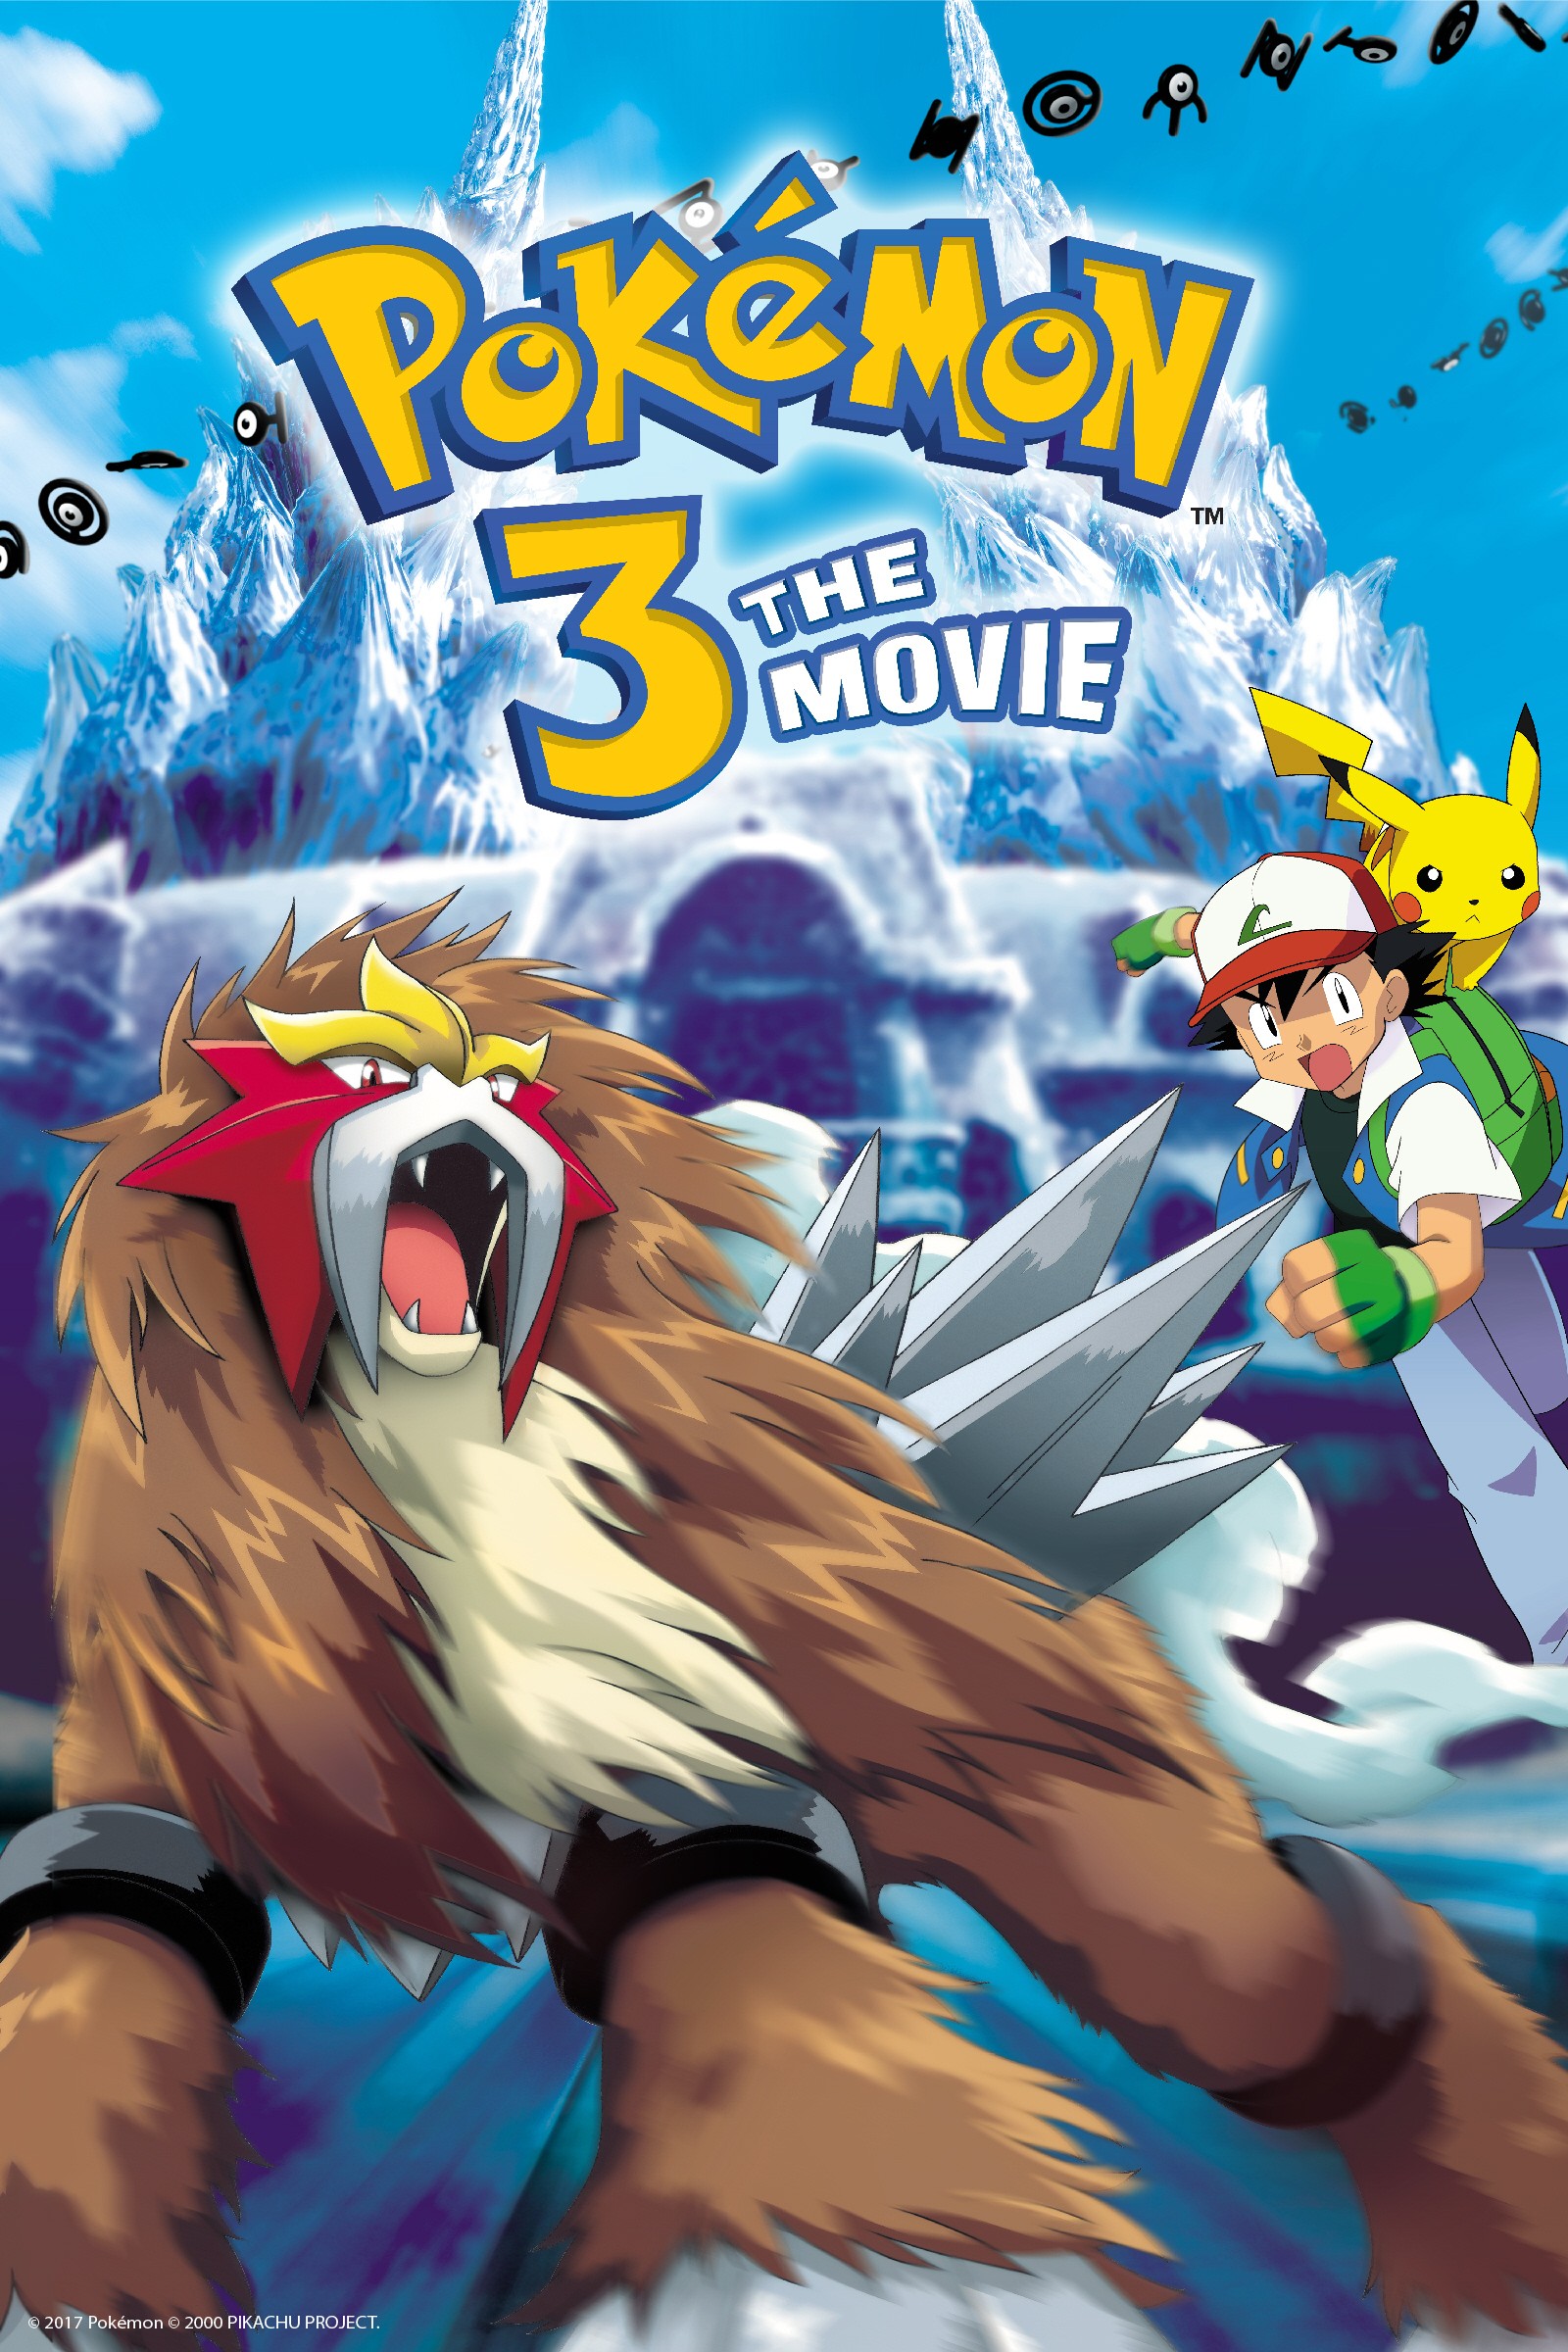 Pokémon: Live Action Series (2023), Netflix